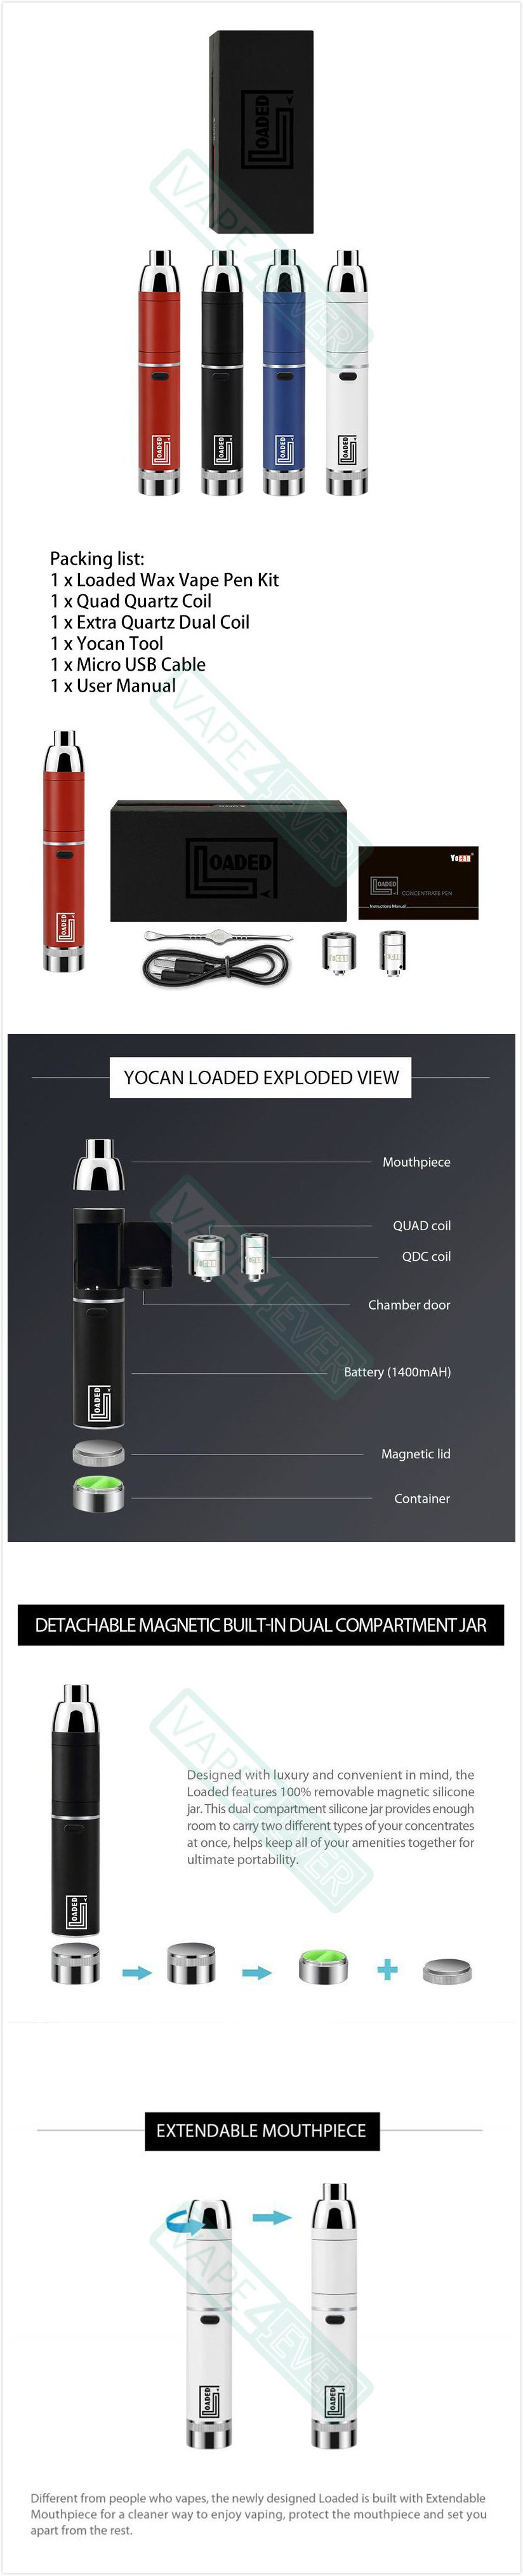 Yocan Loaded Wax Vaporizer Vape Pen Kit 1400mAh Battery Included Quad Quartz Coil Instruction